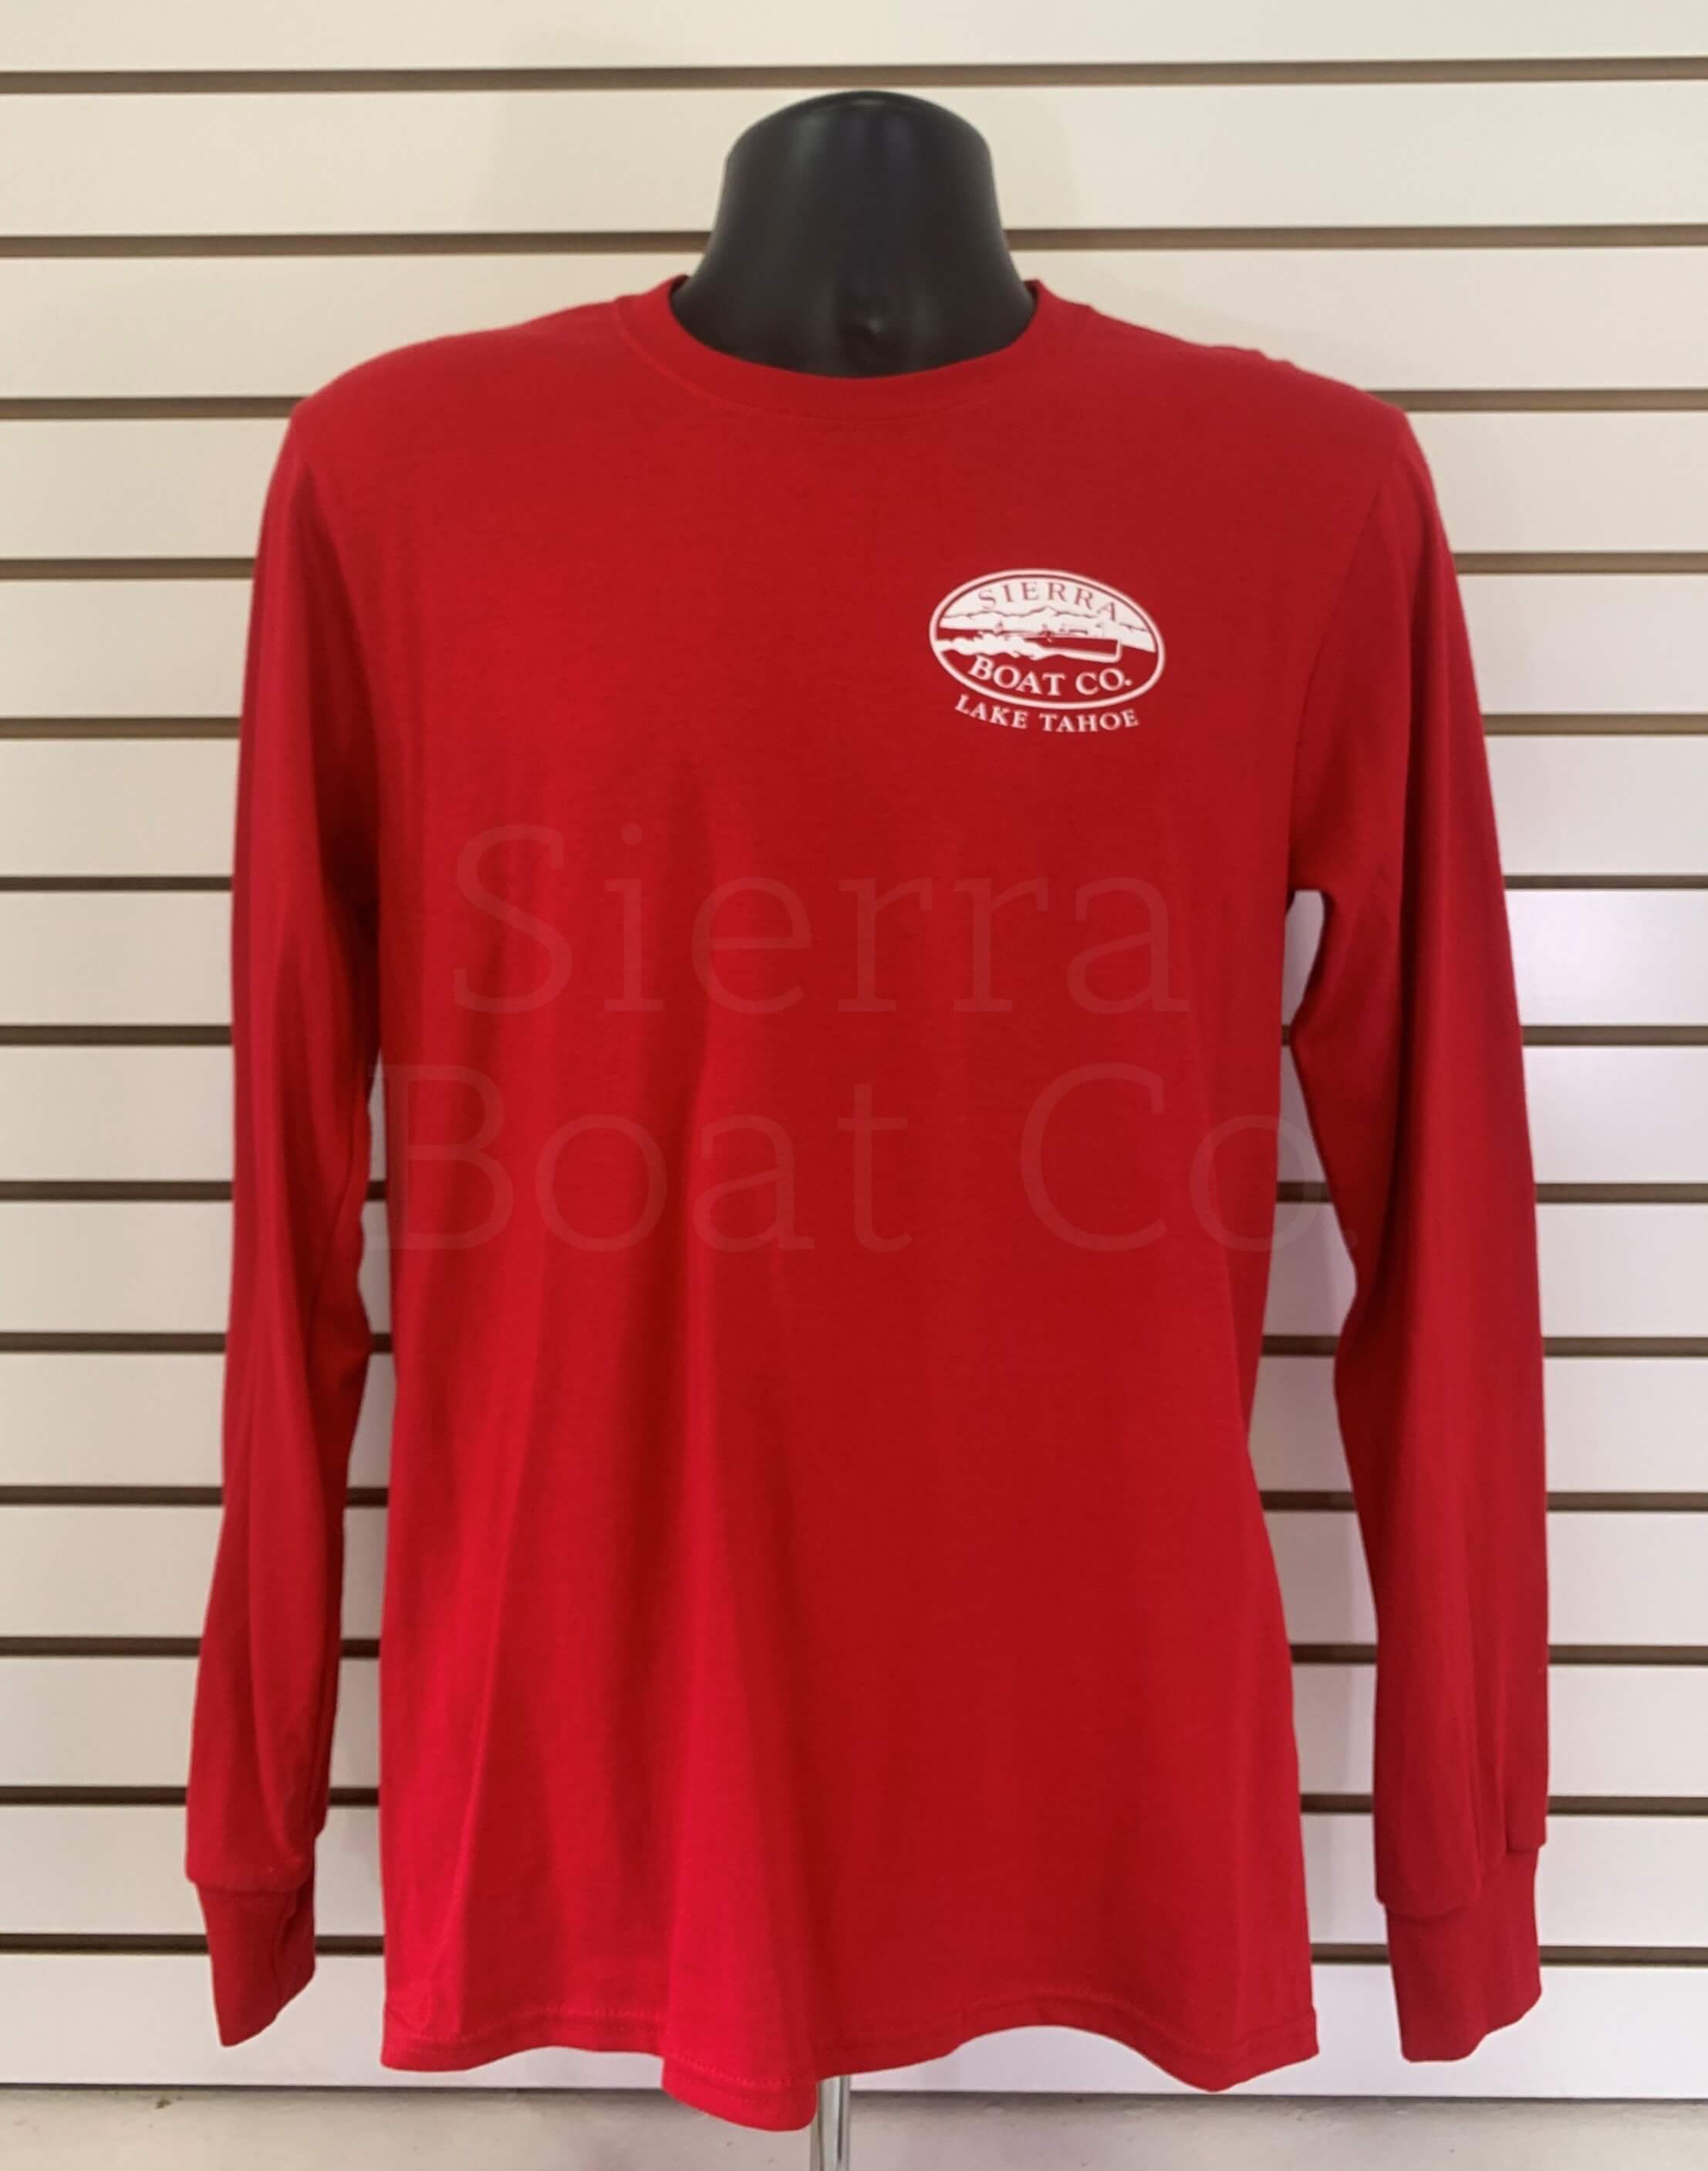 Classic Company Boat - red long sleeve T-shirt. Sierra